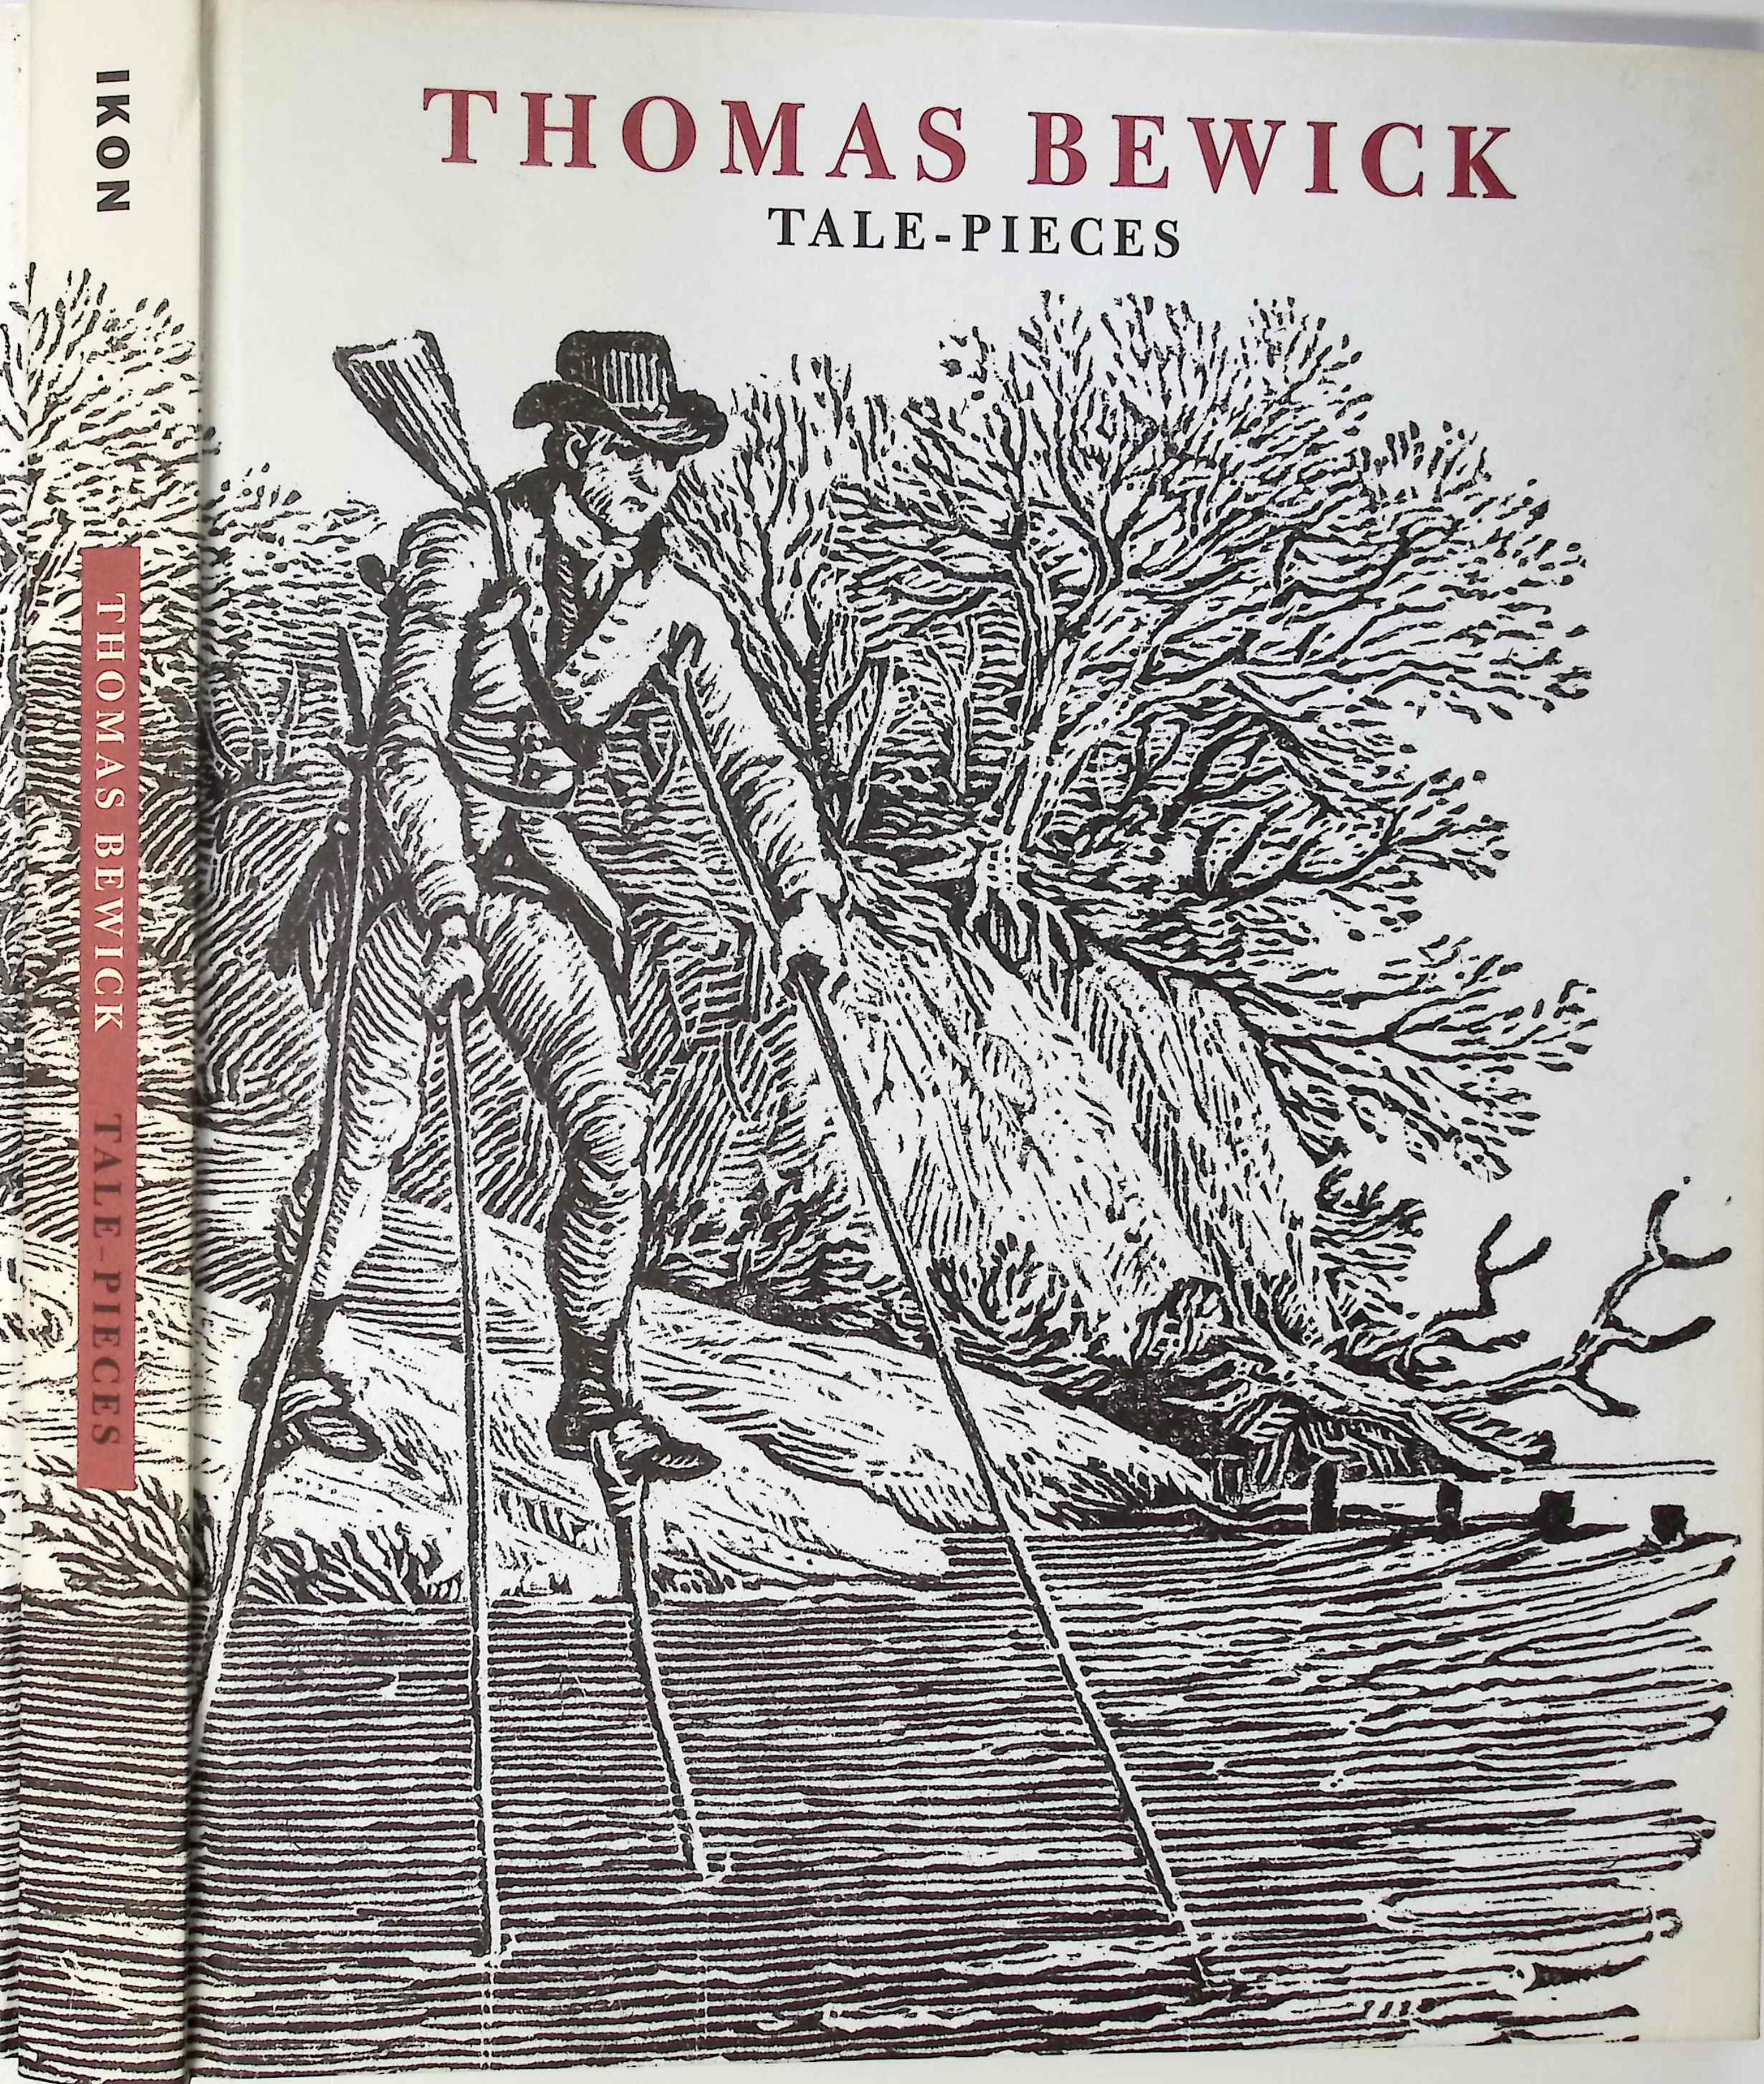 Thomas Bewick: Tale-Pieces